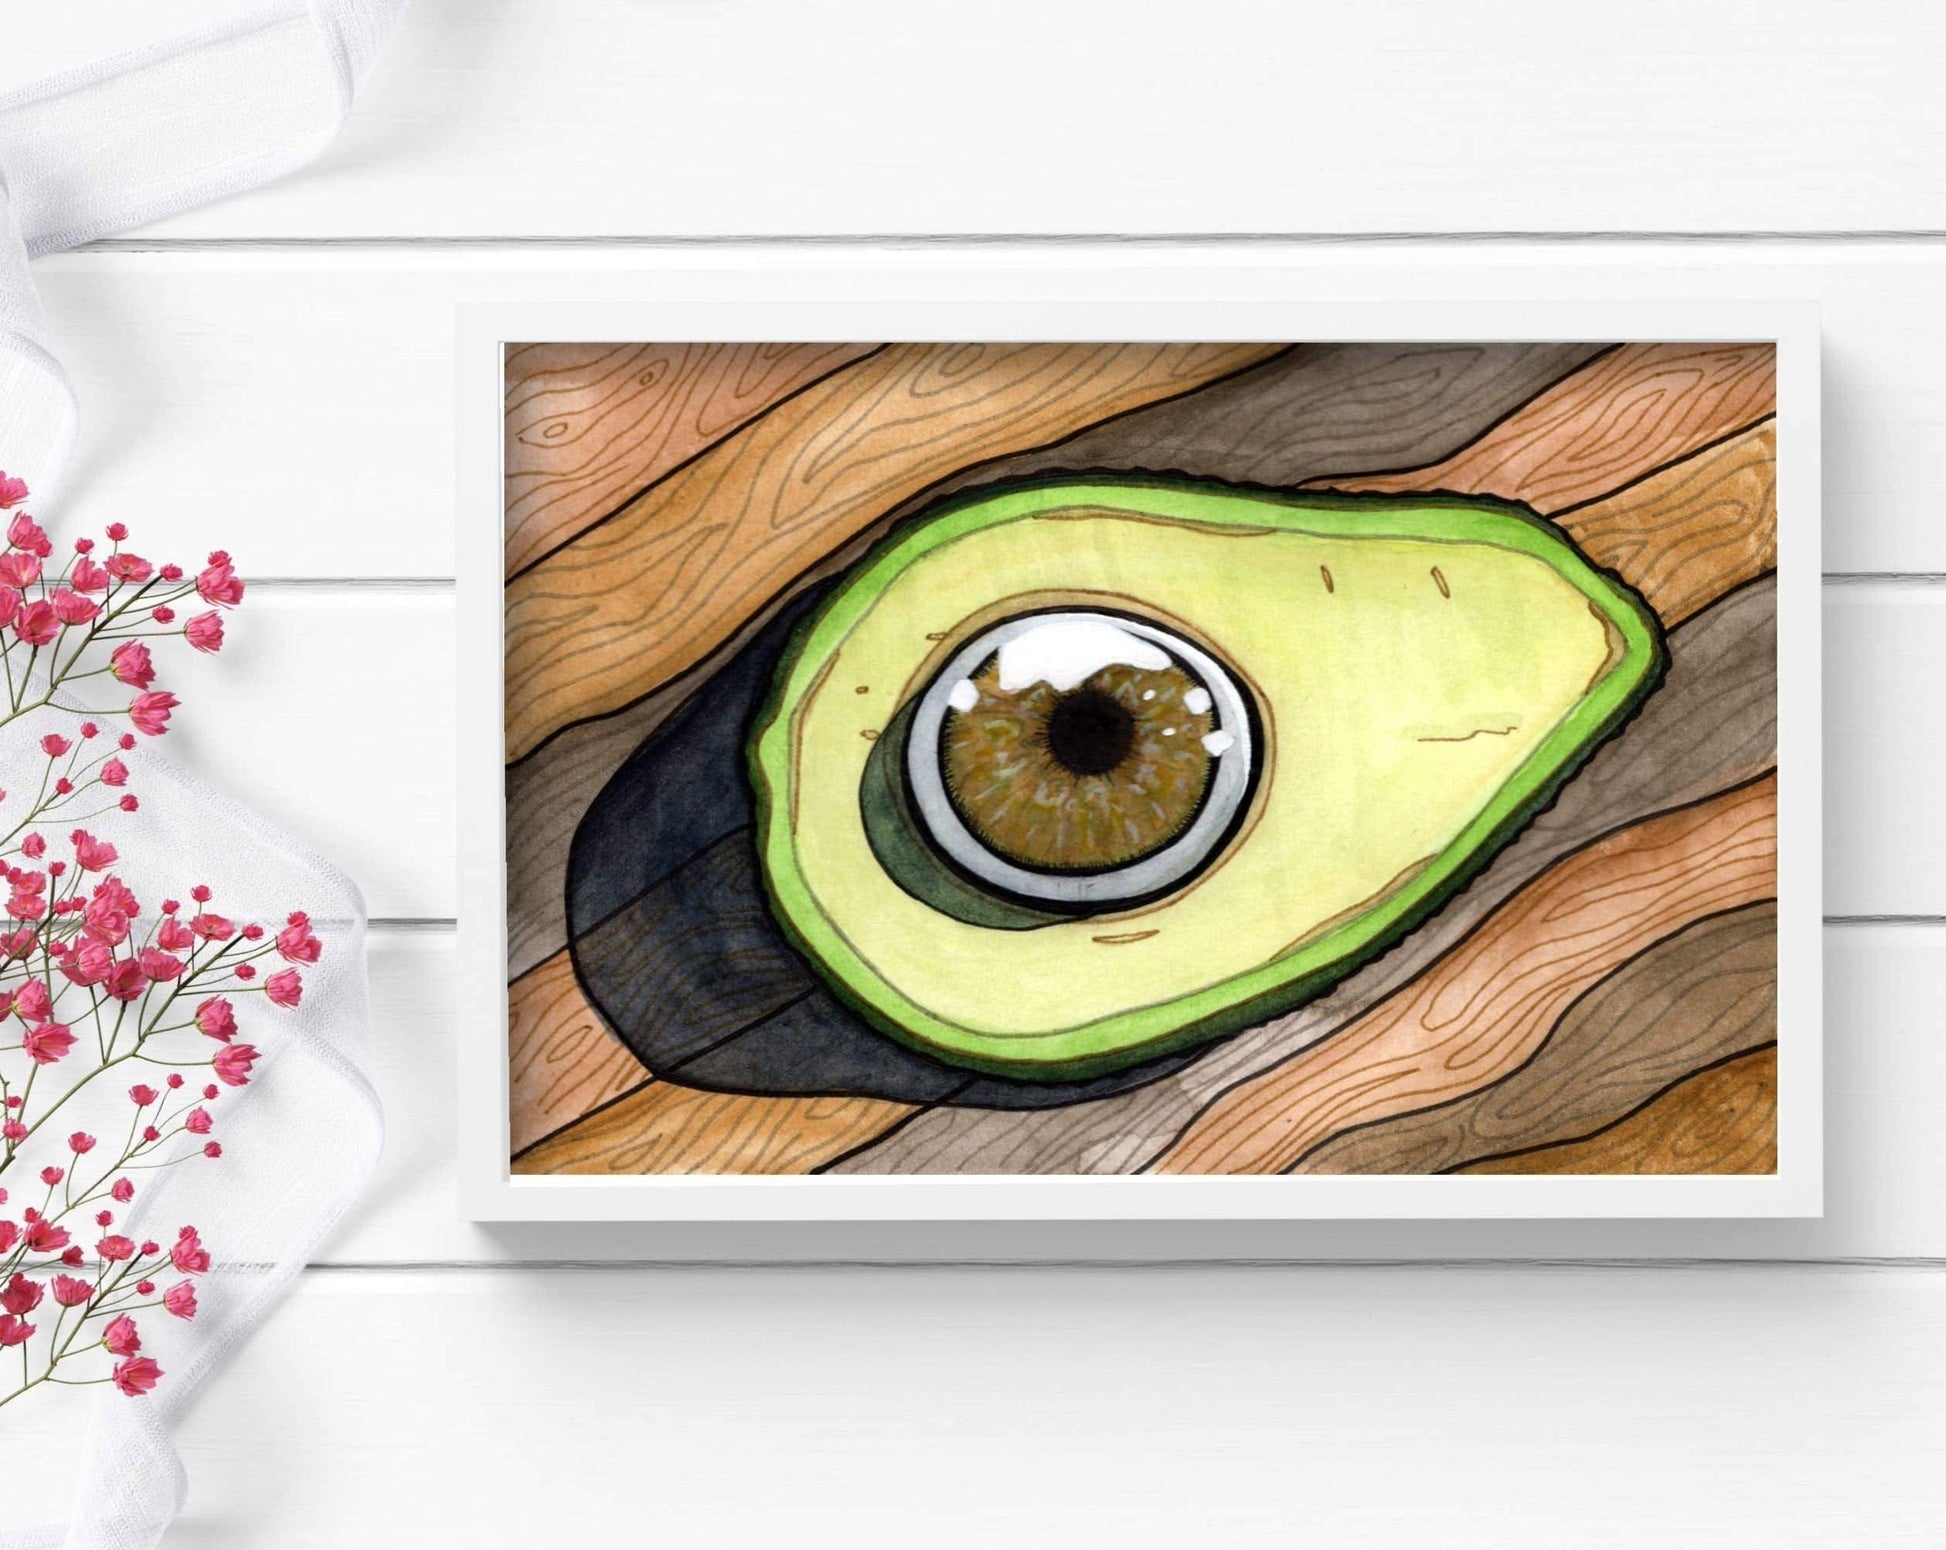 PinkPolish Design Art Prints "Eye of the Avocado" Watercolor Painting: Art Print